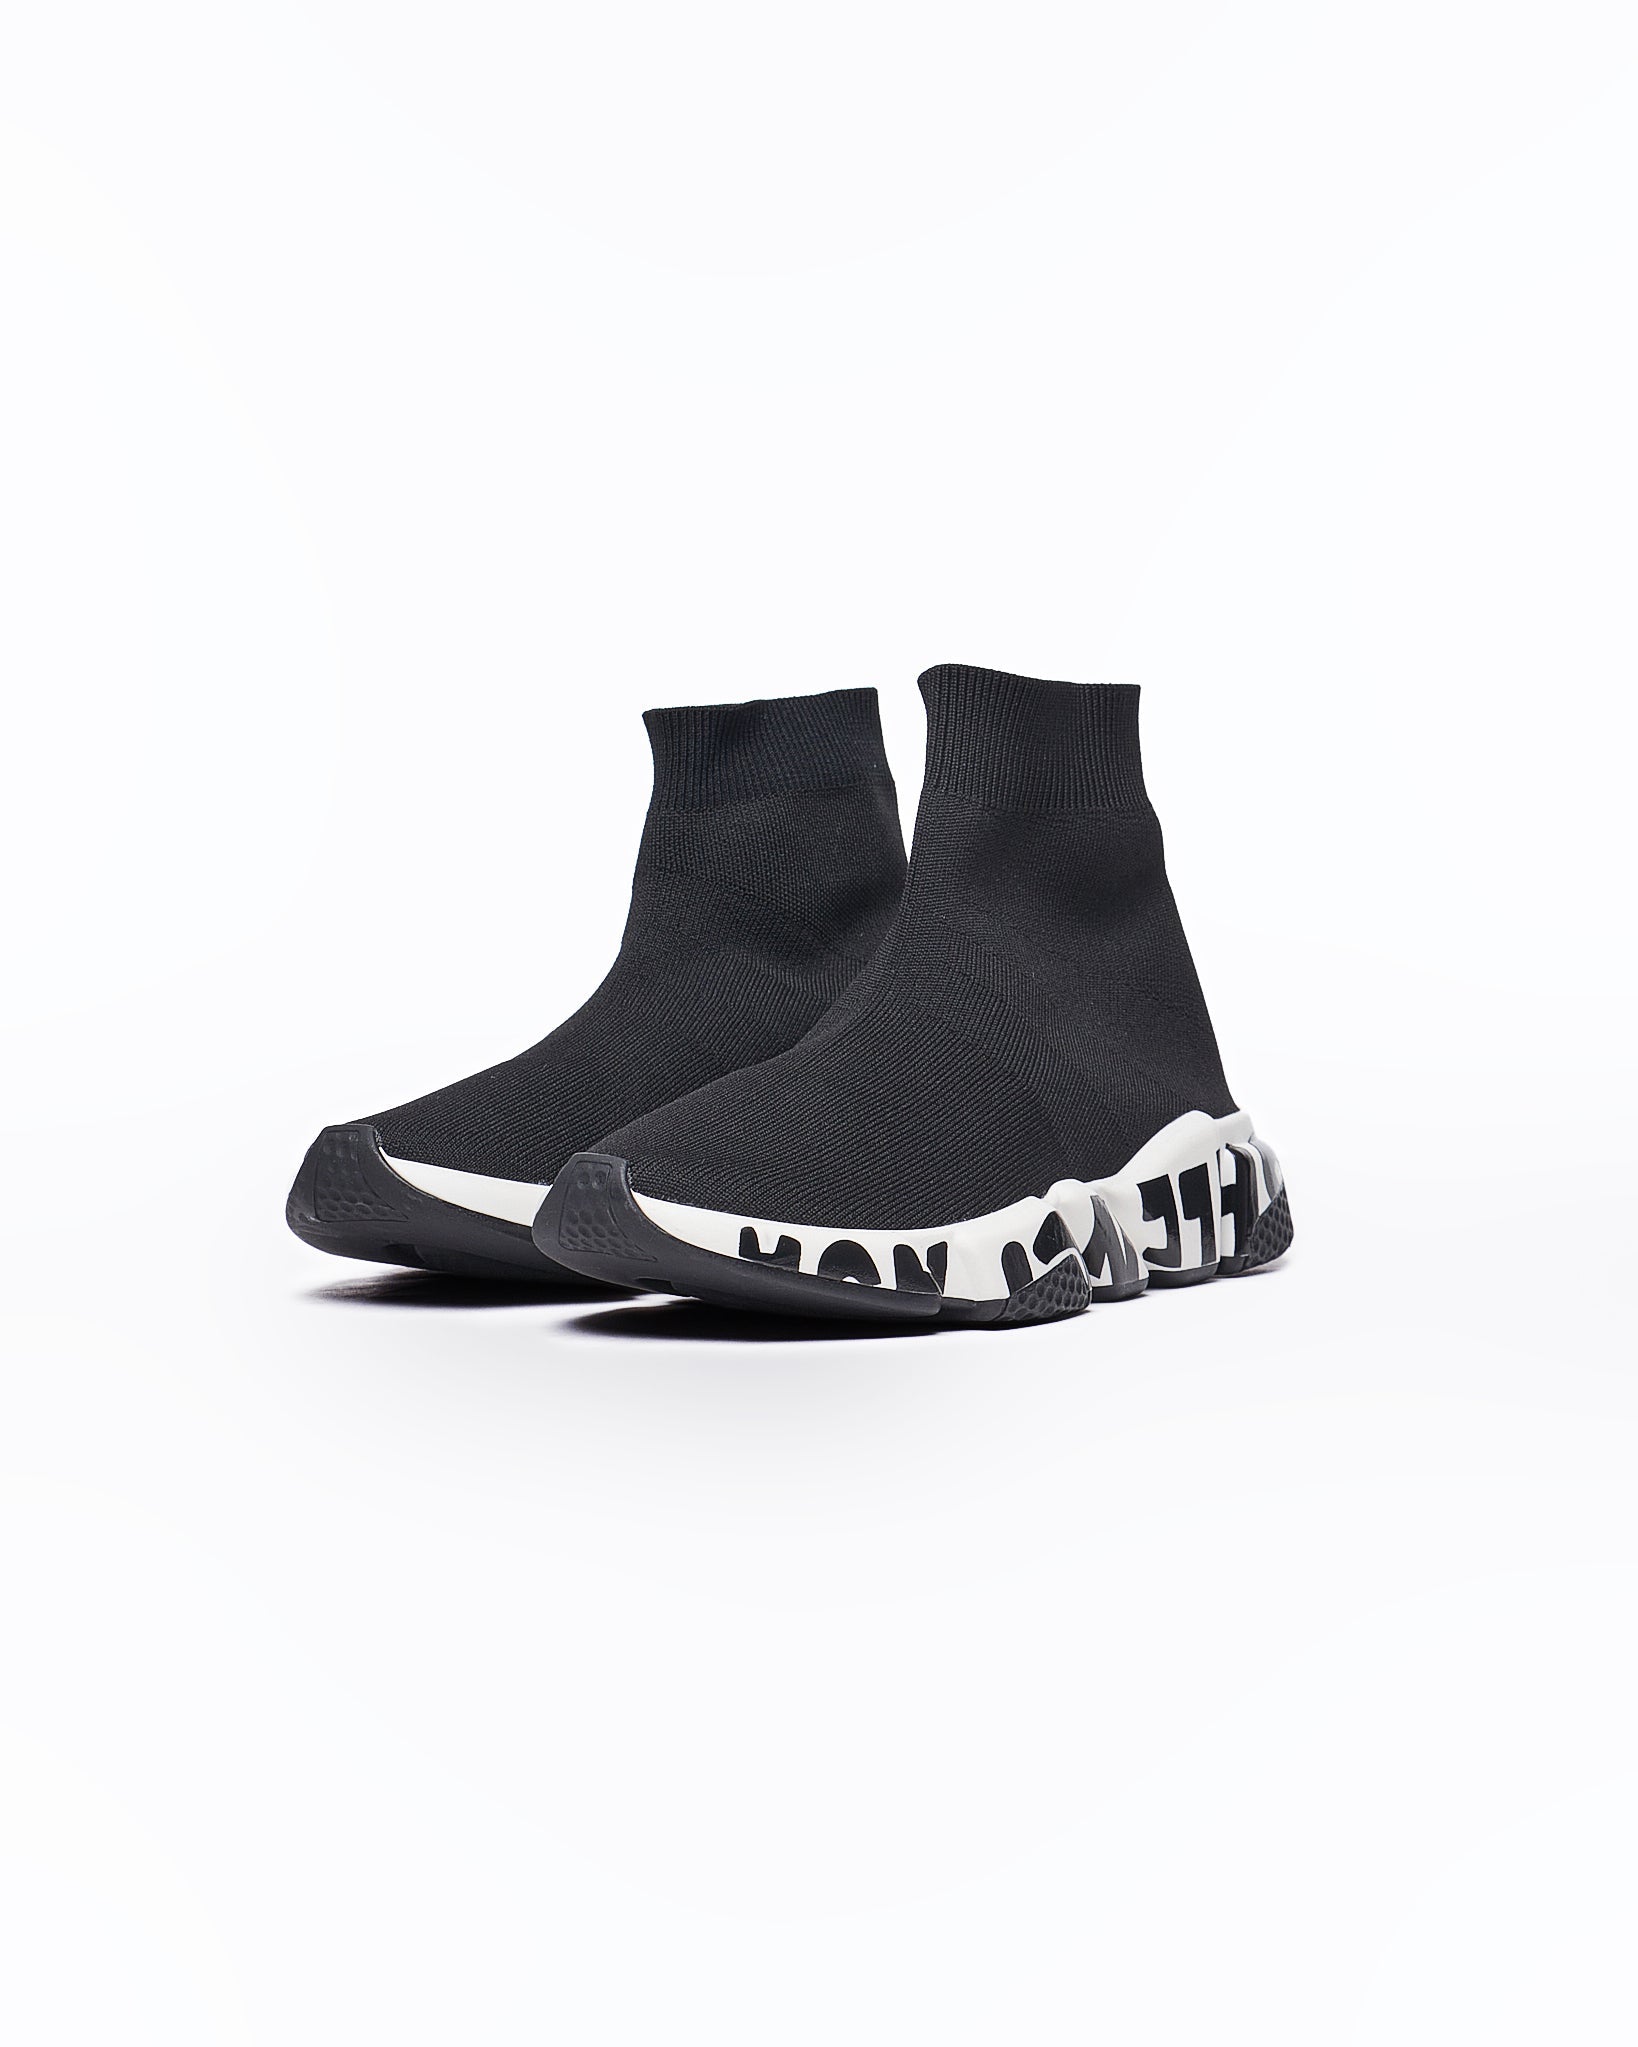 MOI OUTFIT-BAL Speed Graffiti Knit Men Black Sneakers Shoes 84.90